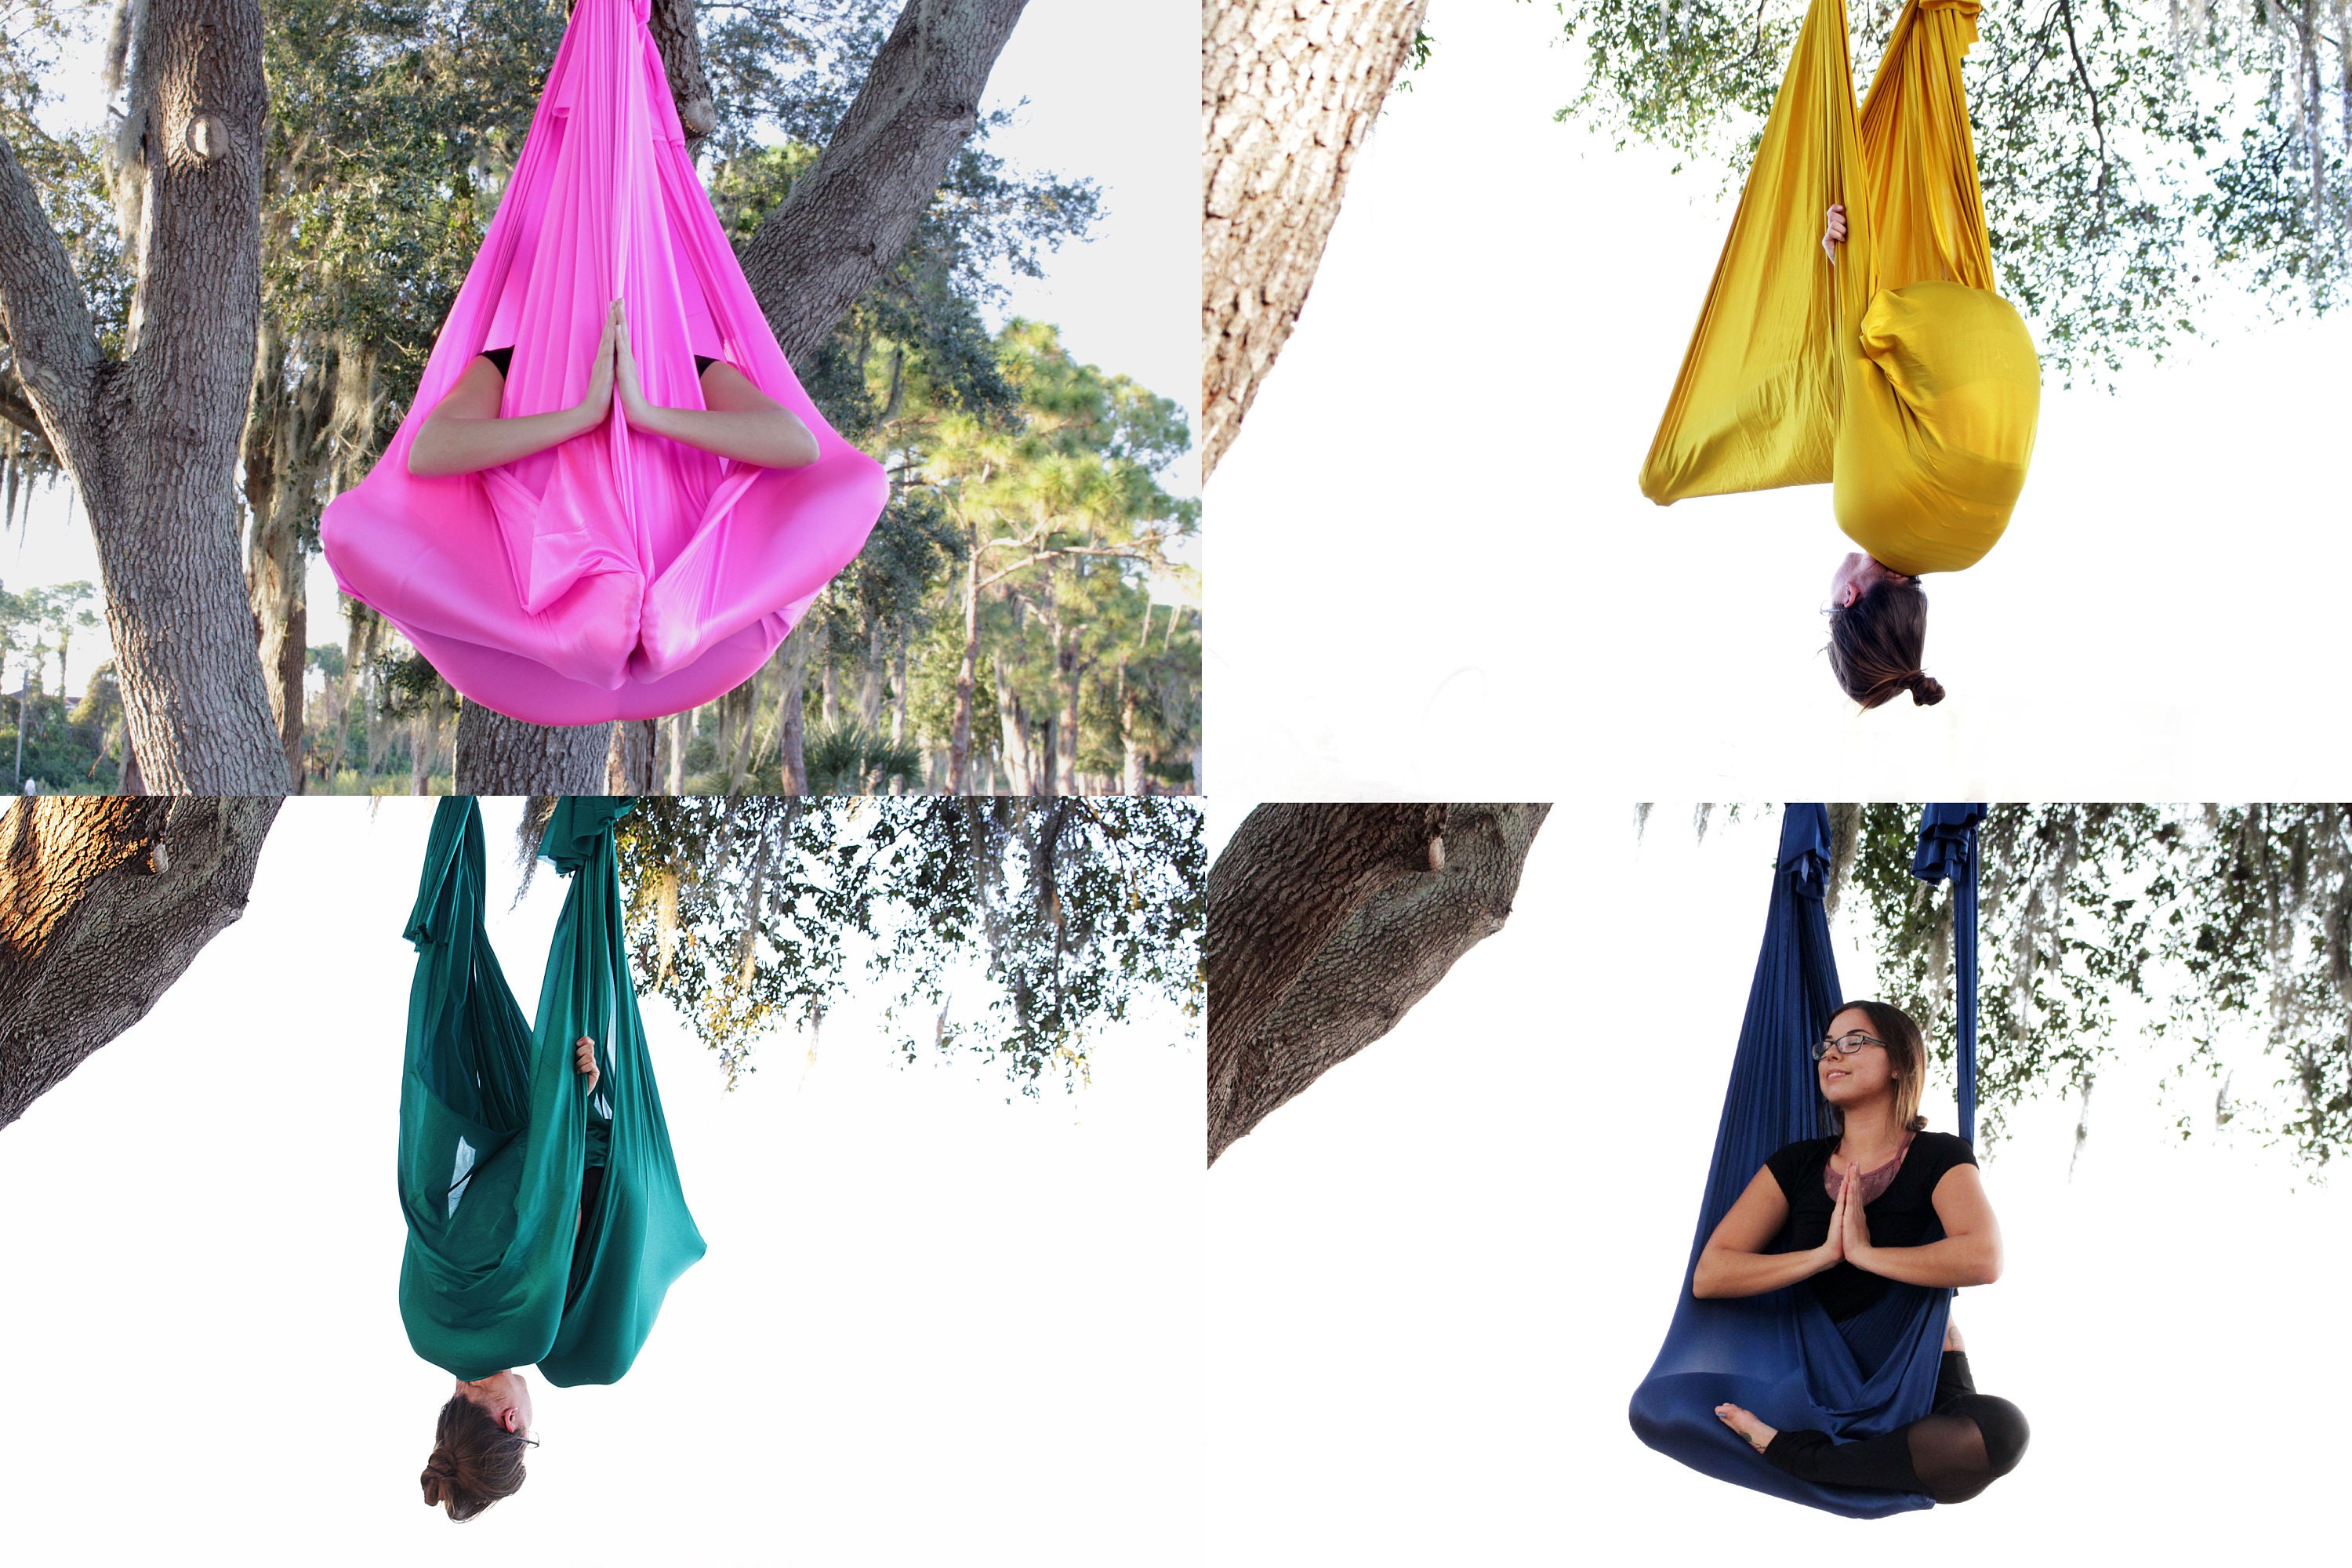 Aerial Silks Yoga Swing Set Equipment - 9 Yards Aerial Yoga Hammock kit,  Low-stretch fabrics for Beginner Dance, Full Accessories